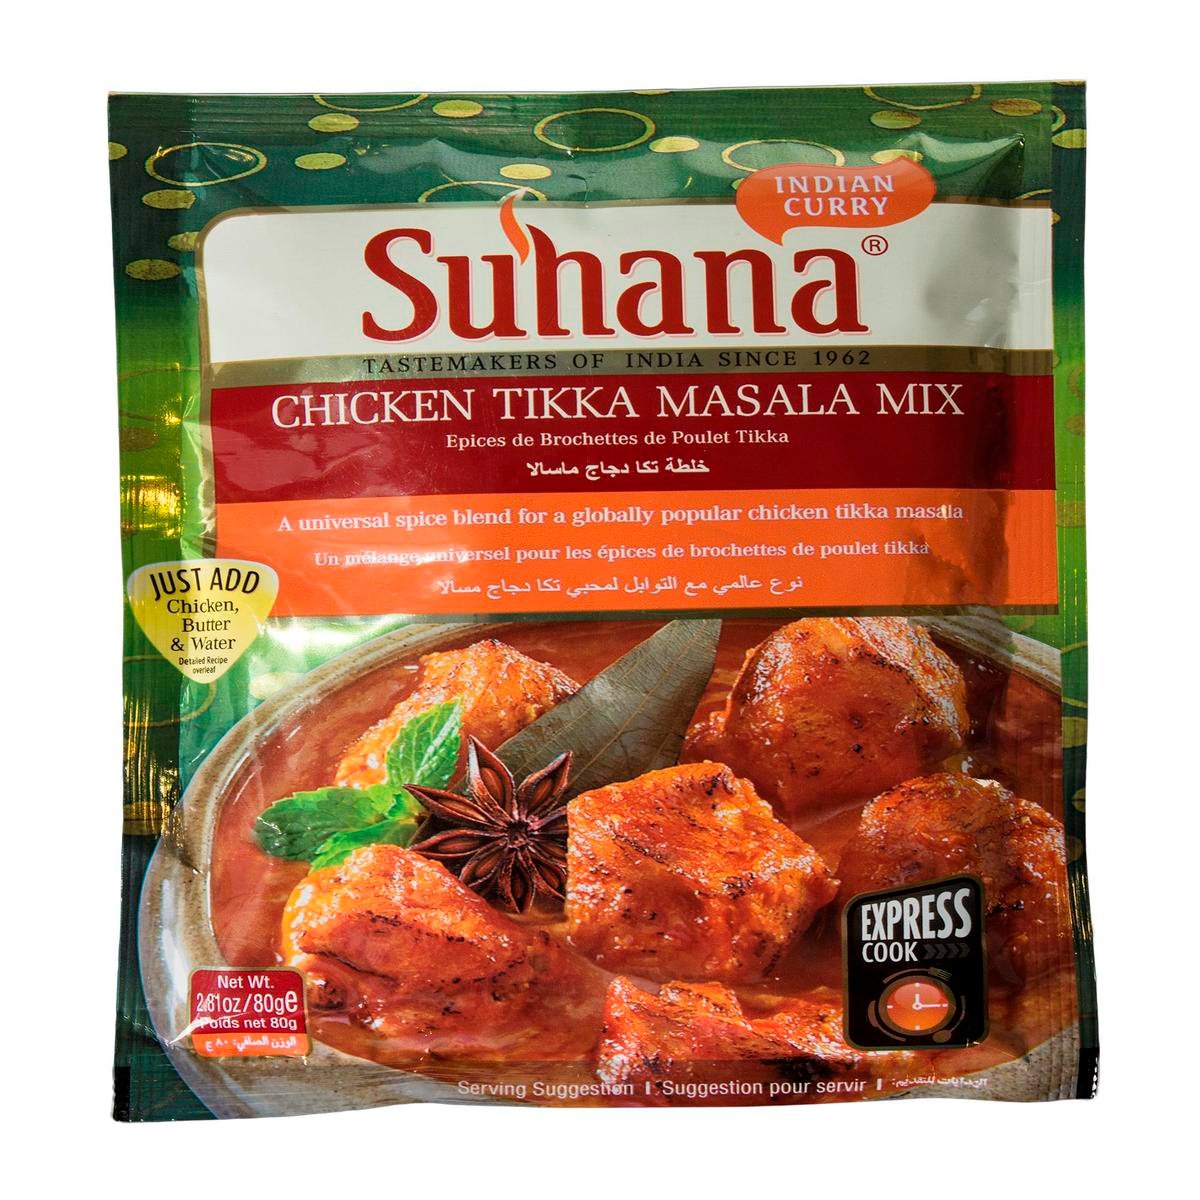 Suhana Chicken Tikka Masala Mix 80g